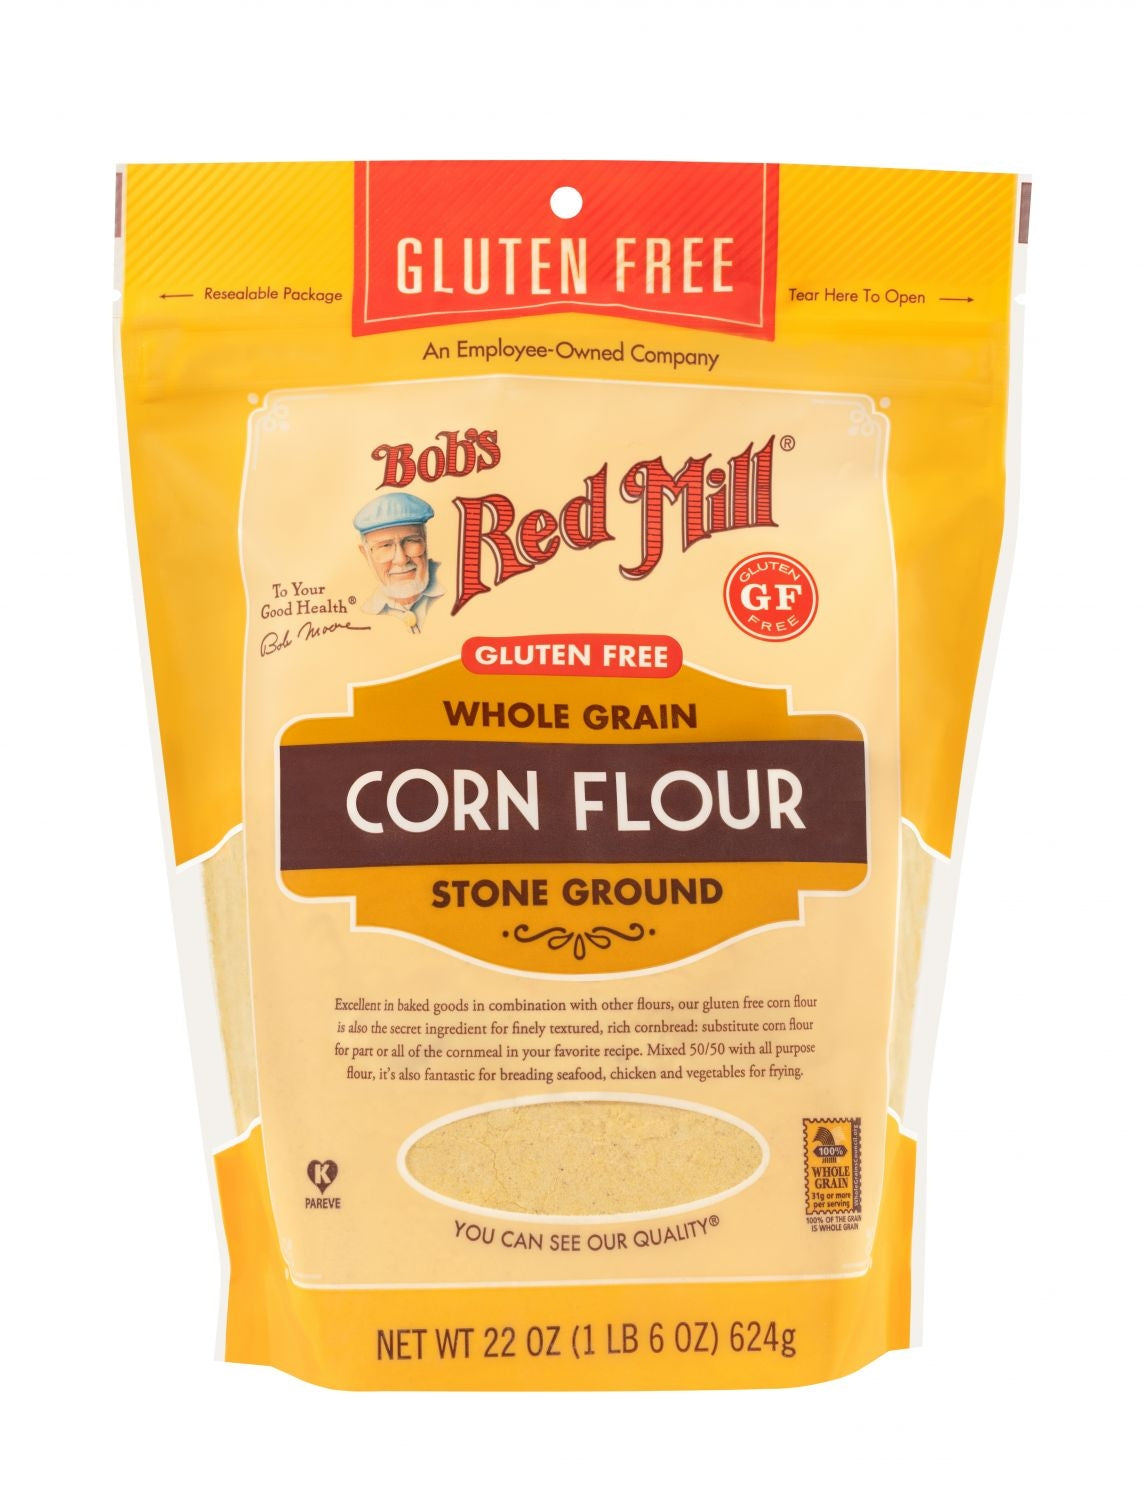 BOB's RED MILL Whole Grain Corn Flour, 624g, Gluten Free